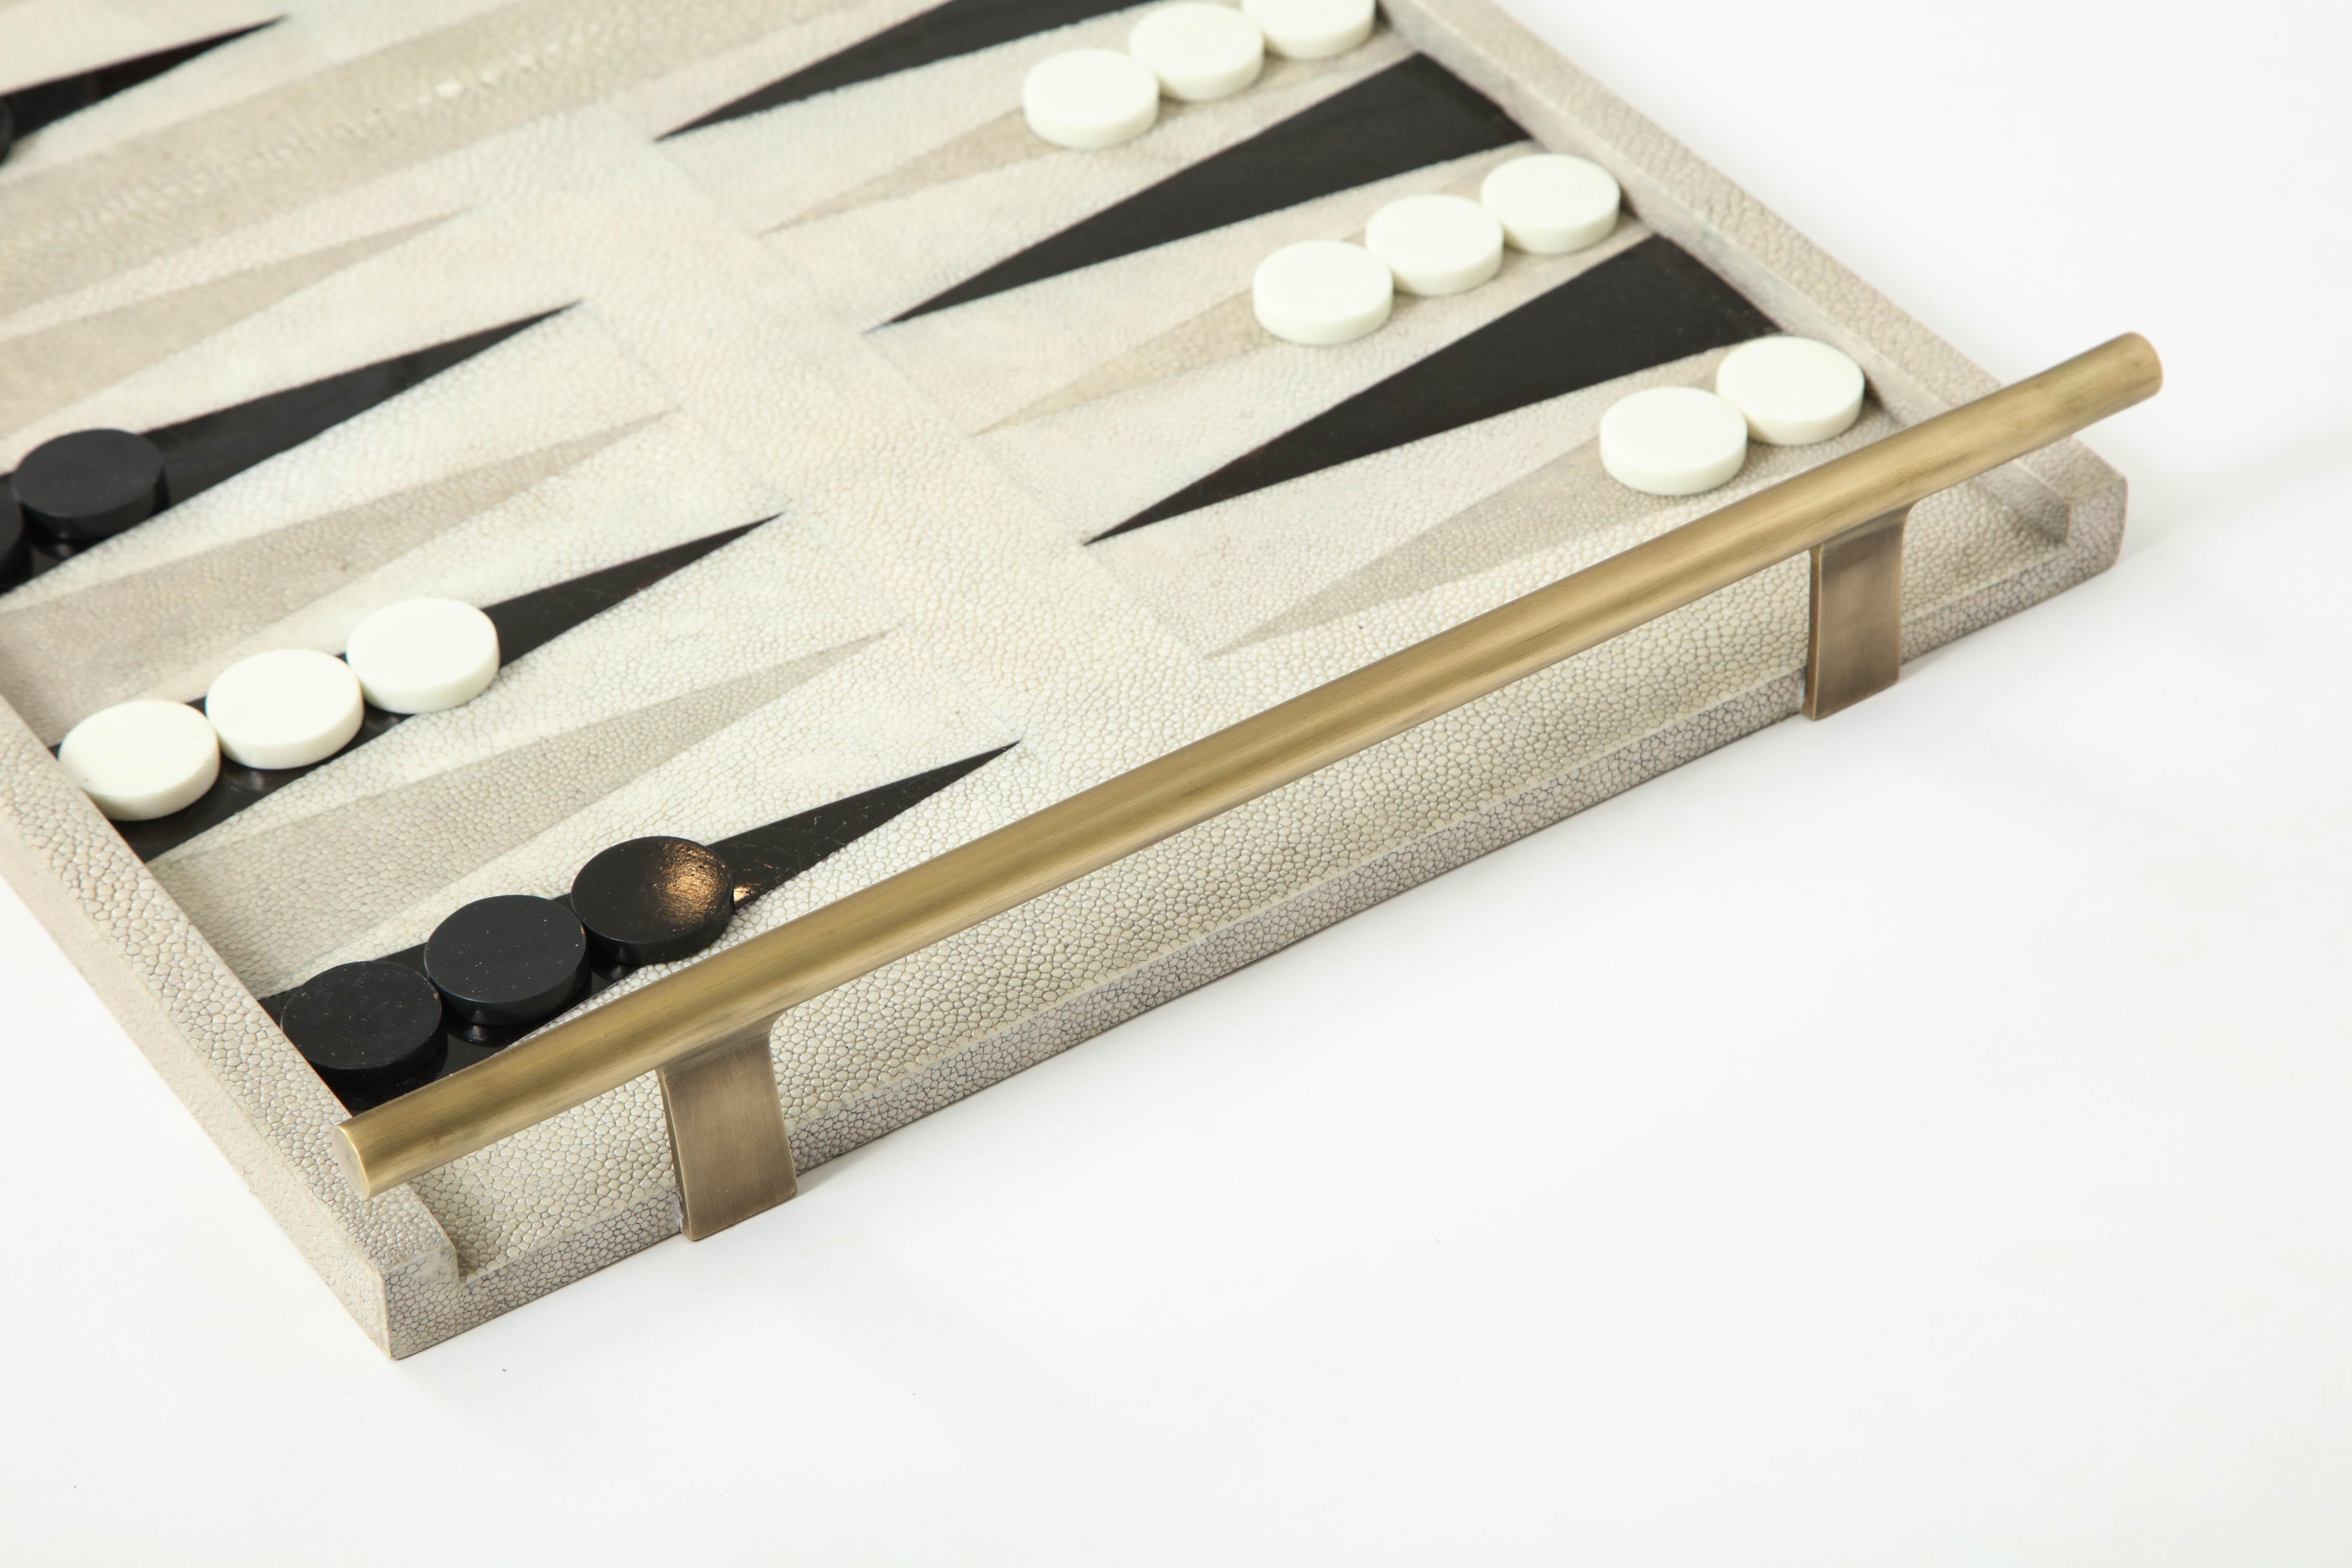 Philippine Backgammon Game, Cream Shagreen, Black Sea Shell and Brass Details